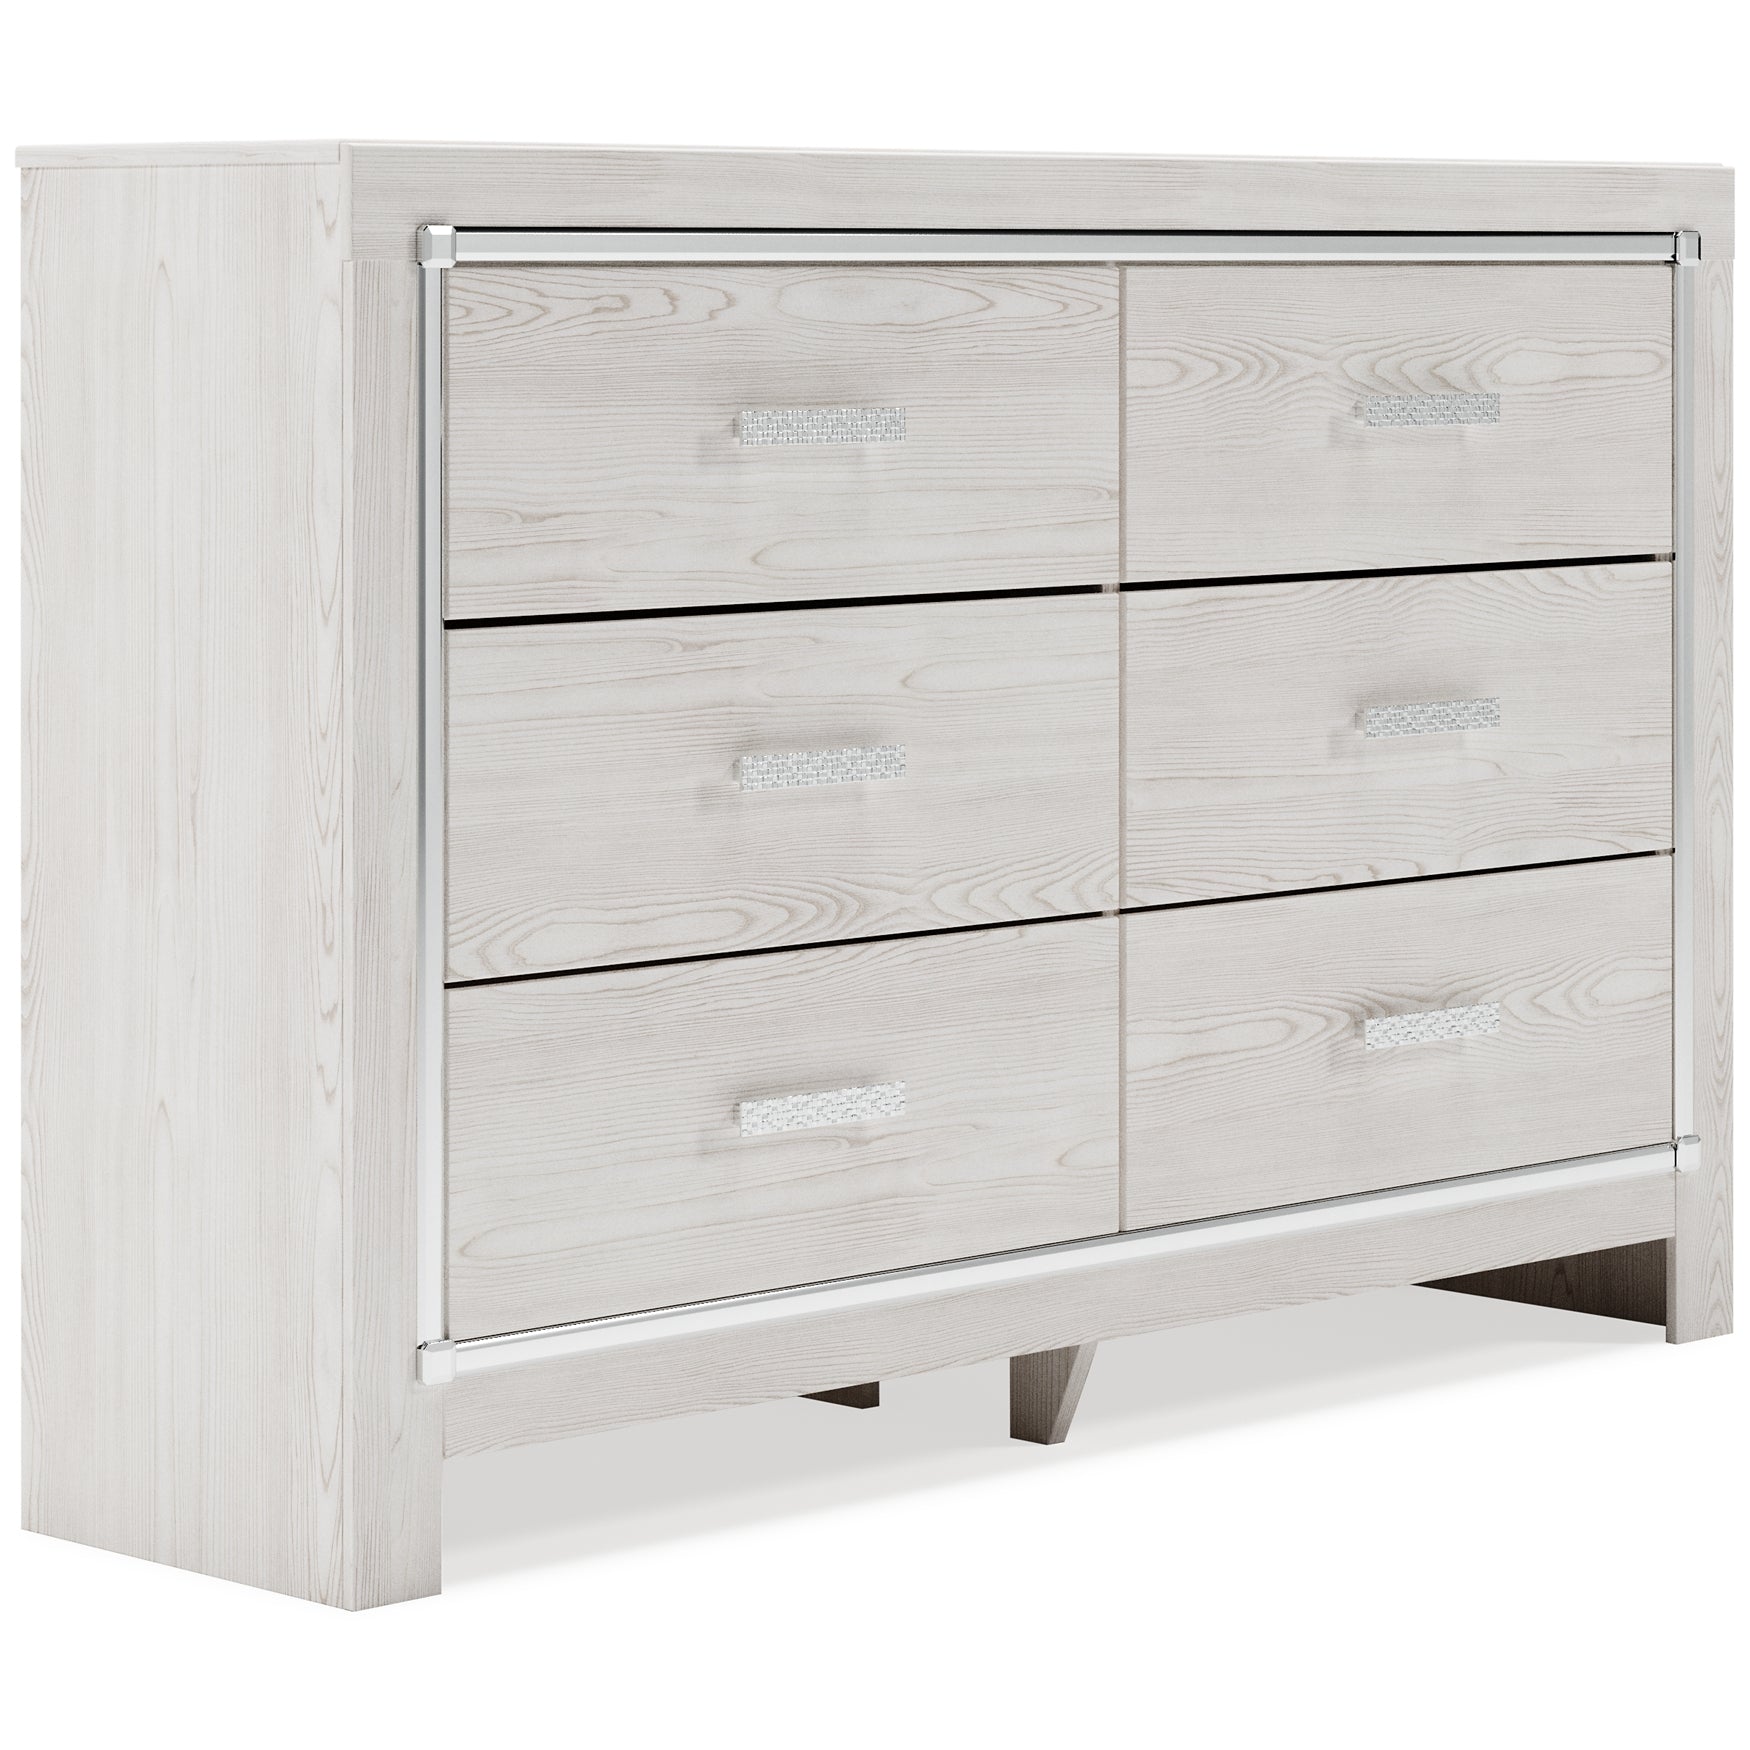 Altyra King Panel Headboard with Dresser JB's Furniture  Home Furniture, Home Decor, Furniture Store